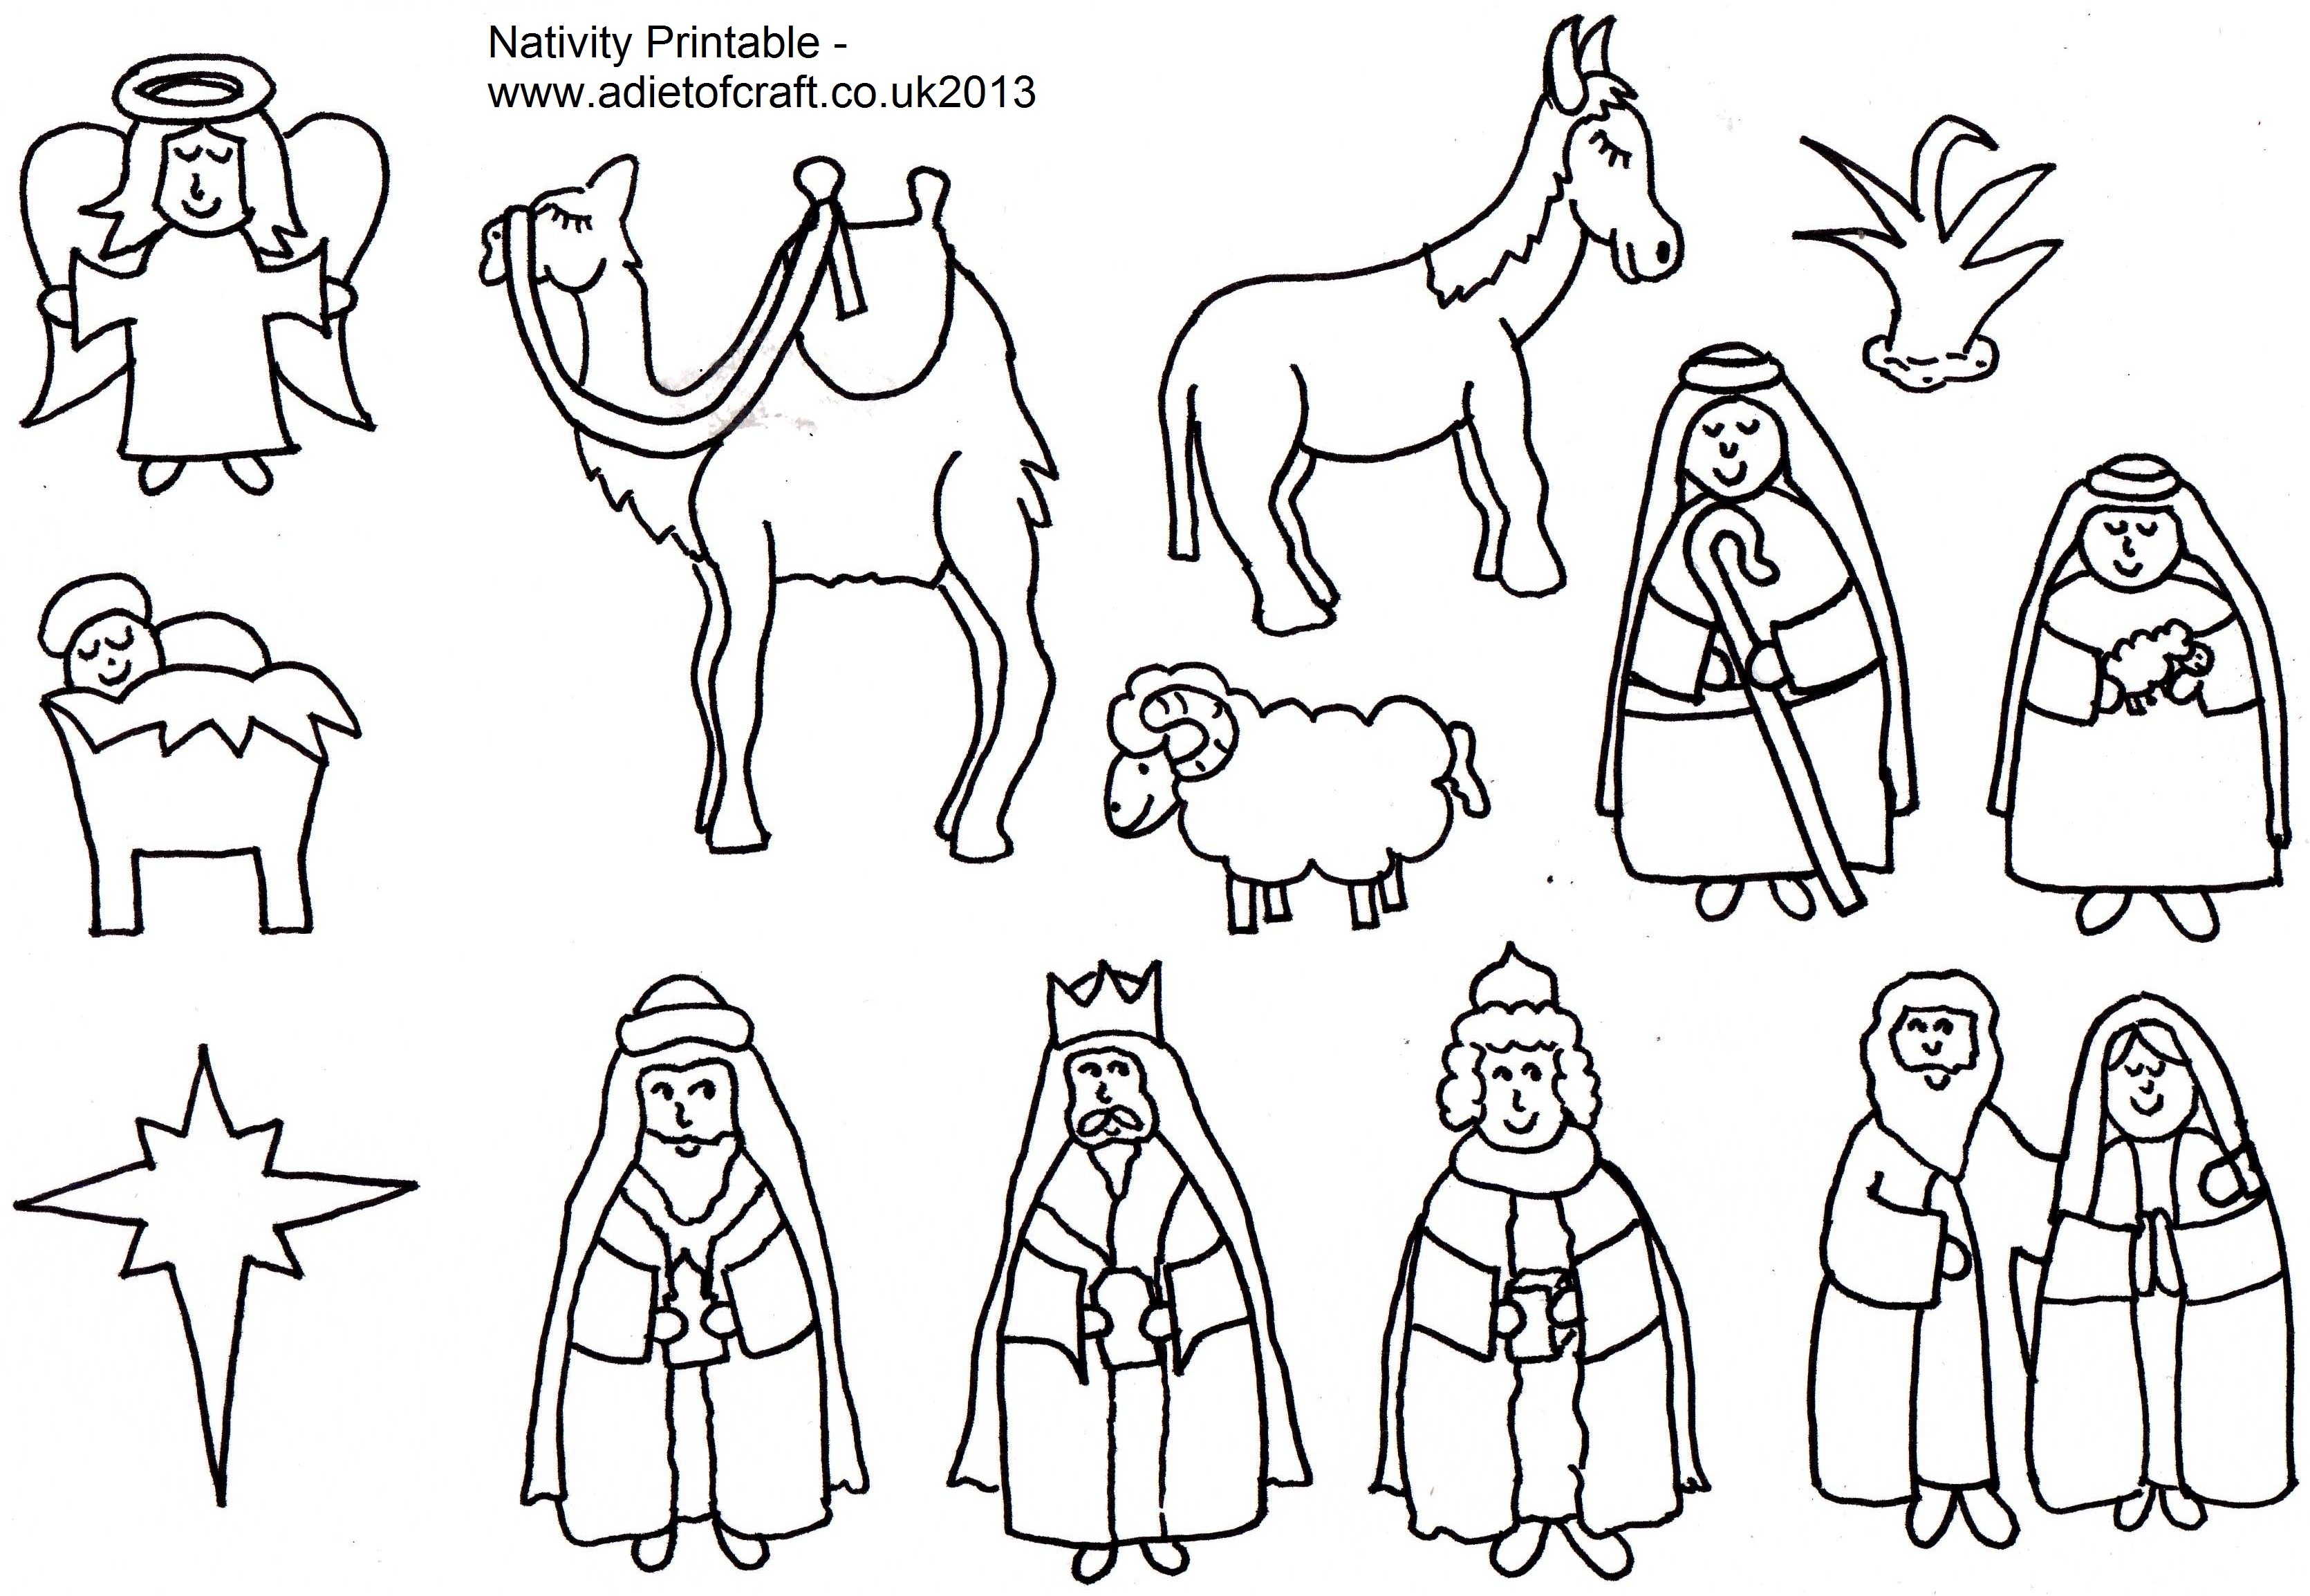 Search Results for “Nativity Scene Printable Cutouts” Calendar 2015